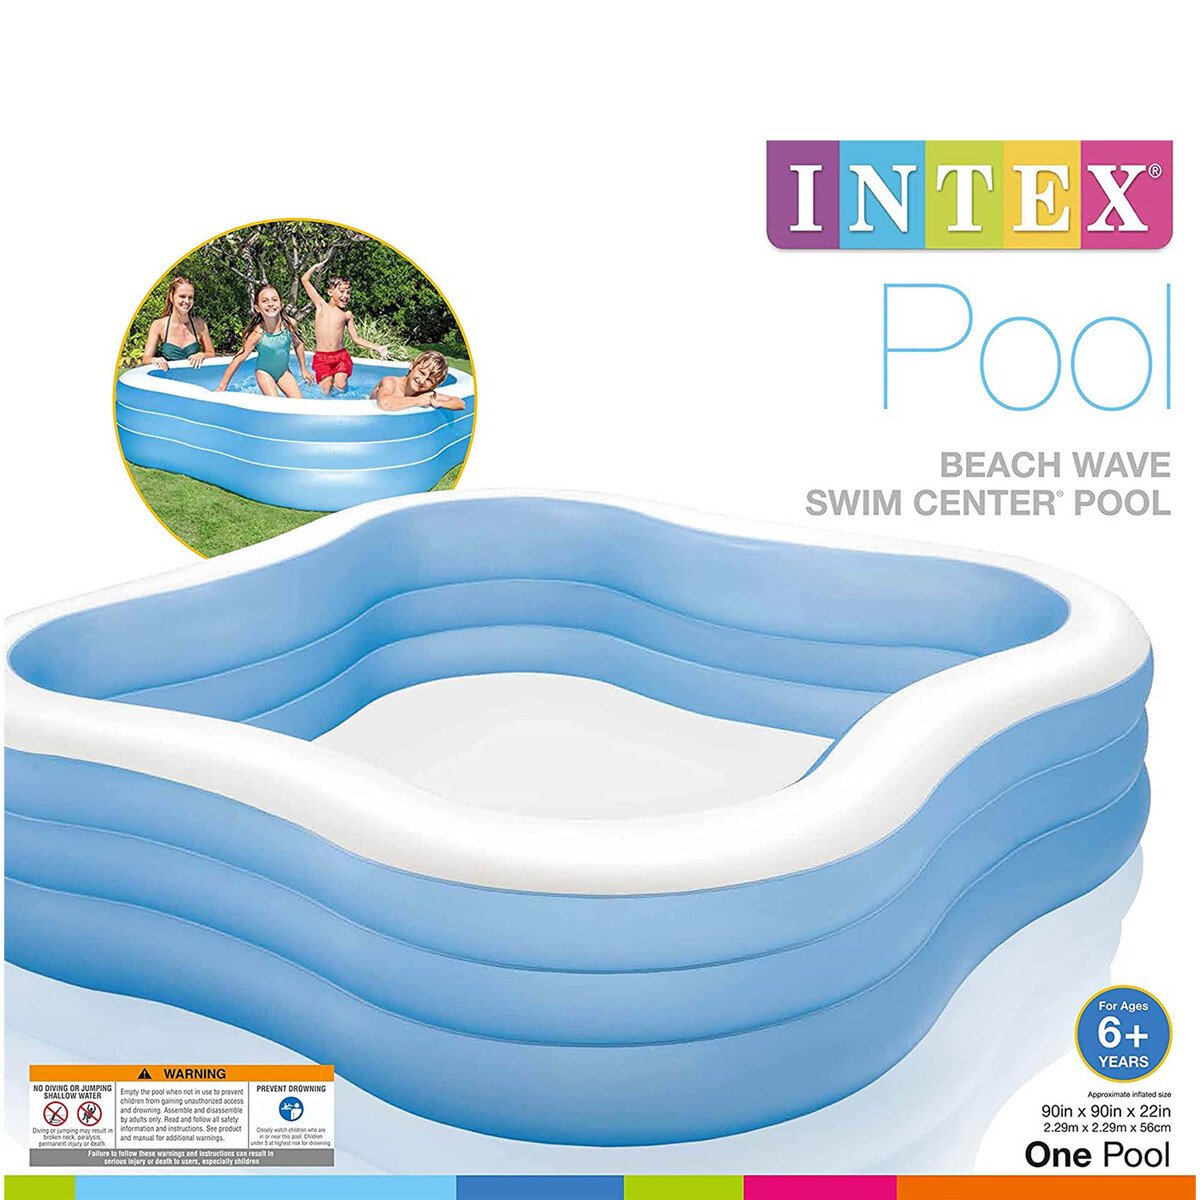 Intex Pool Beach Wave Swim Center Pool 57495